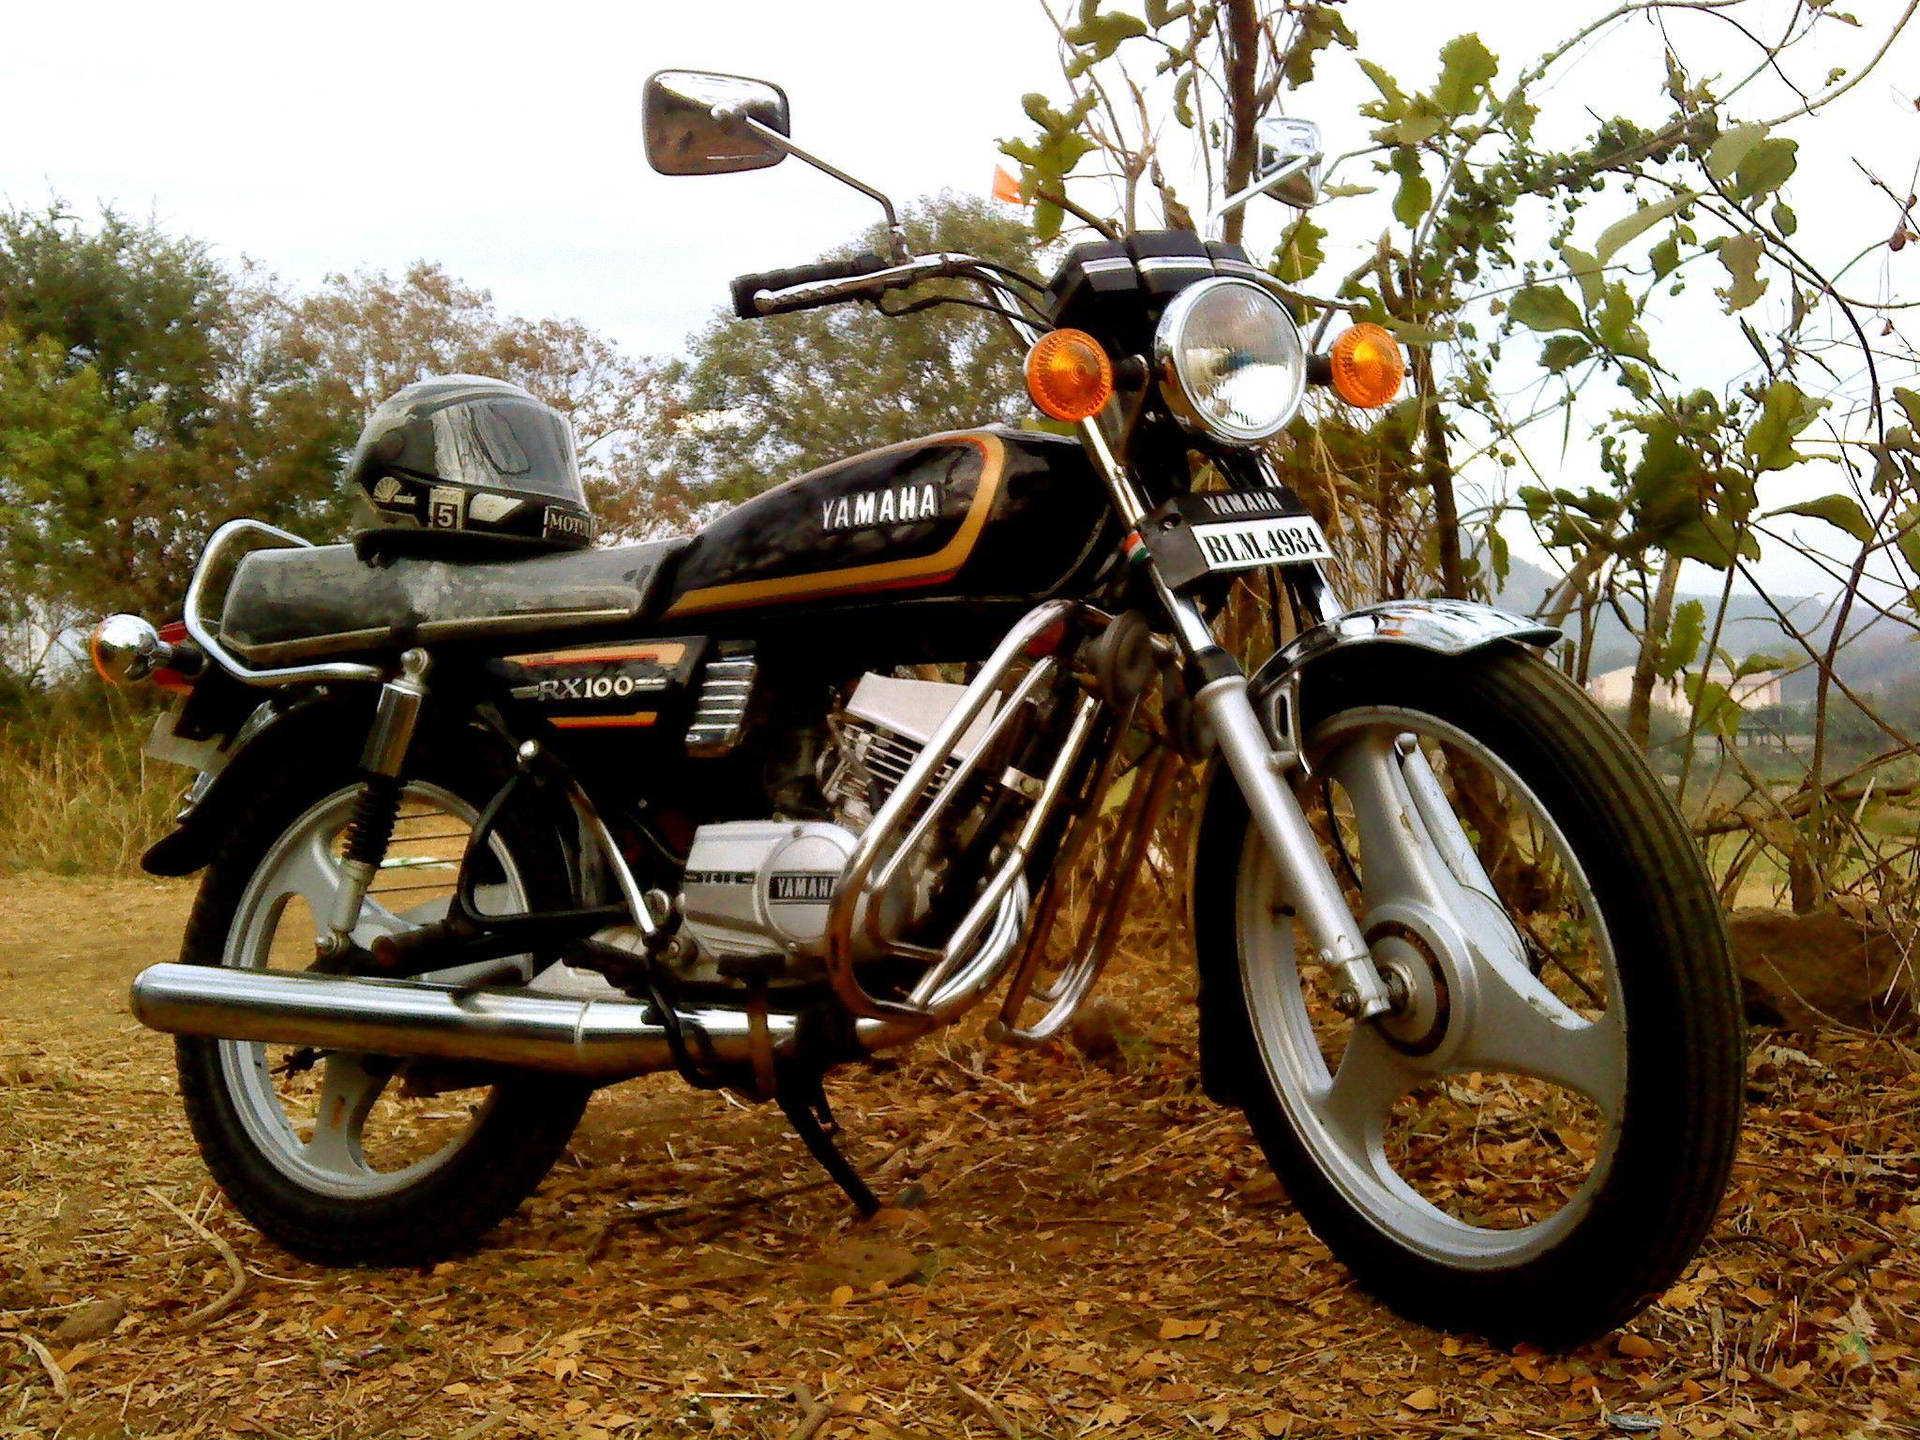 Moto Yamaha Rx100 Nera Parcheggiata Sfondo